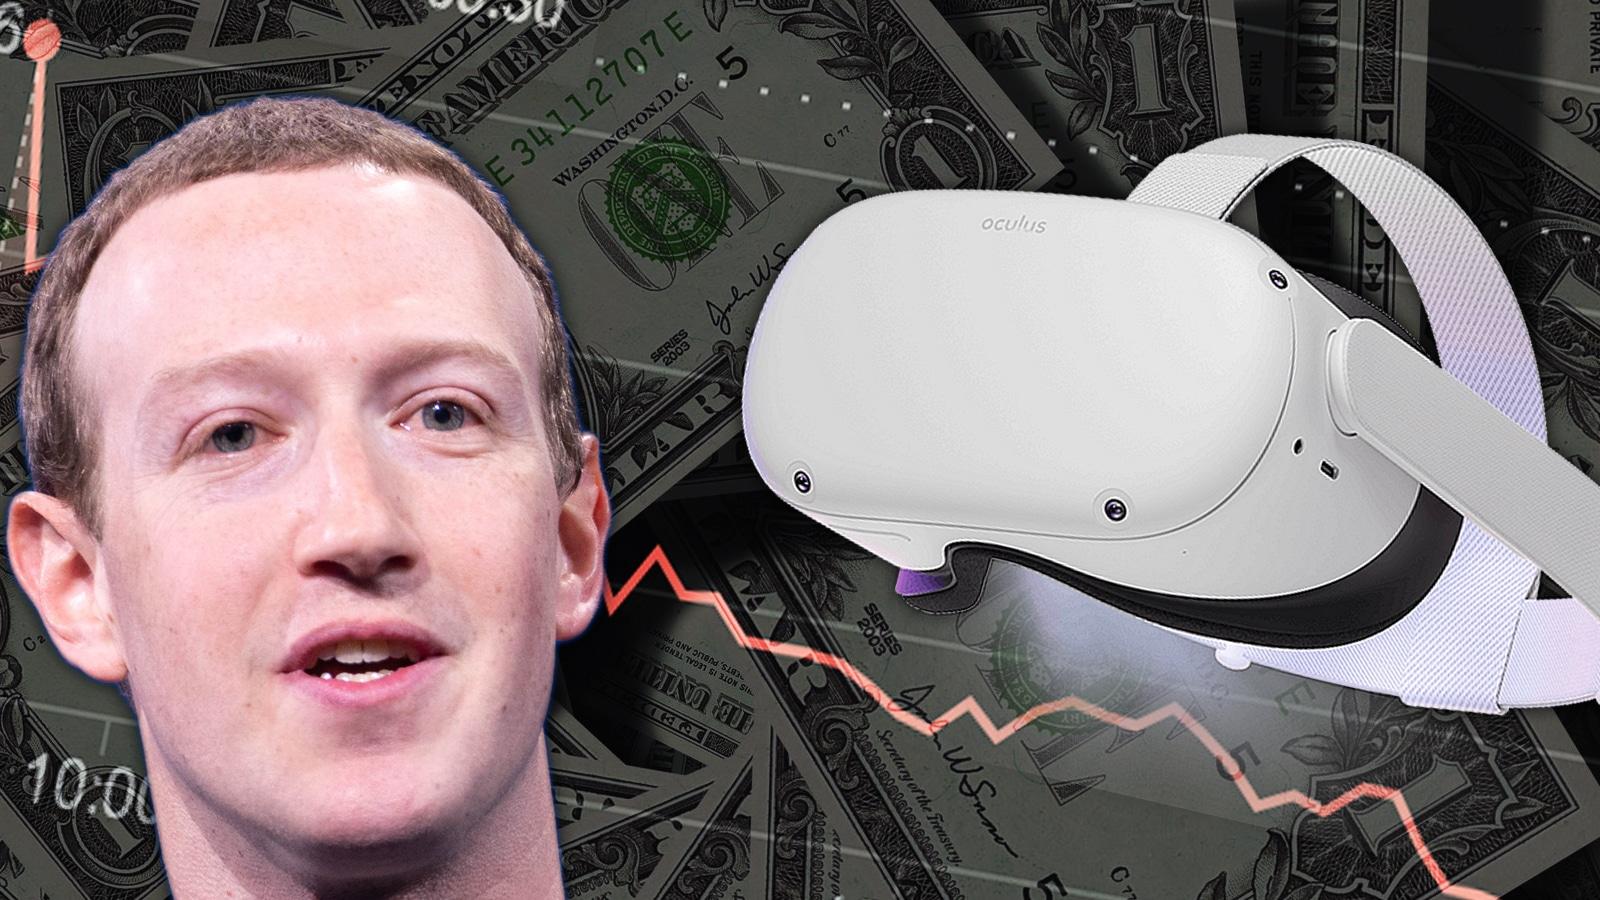 Zuckerberg, Quest 2 and money in background